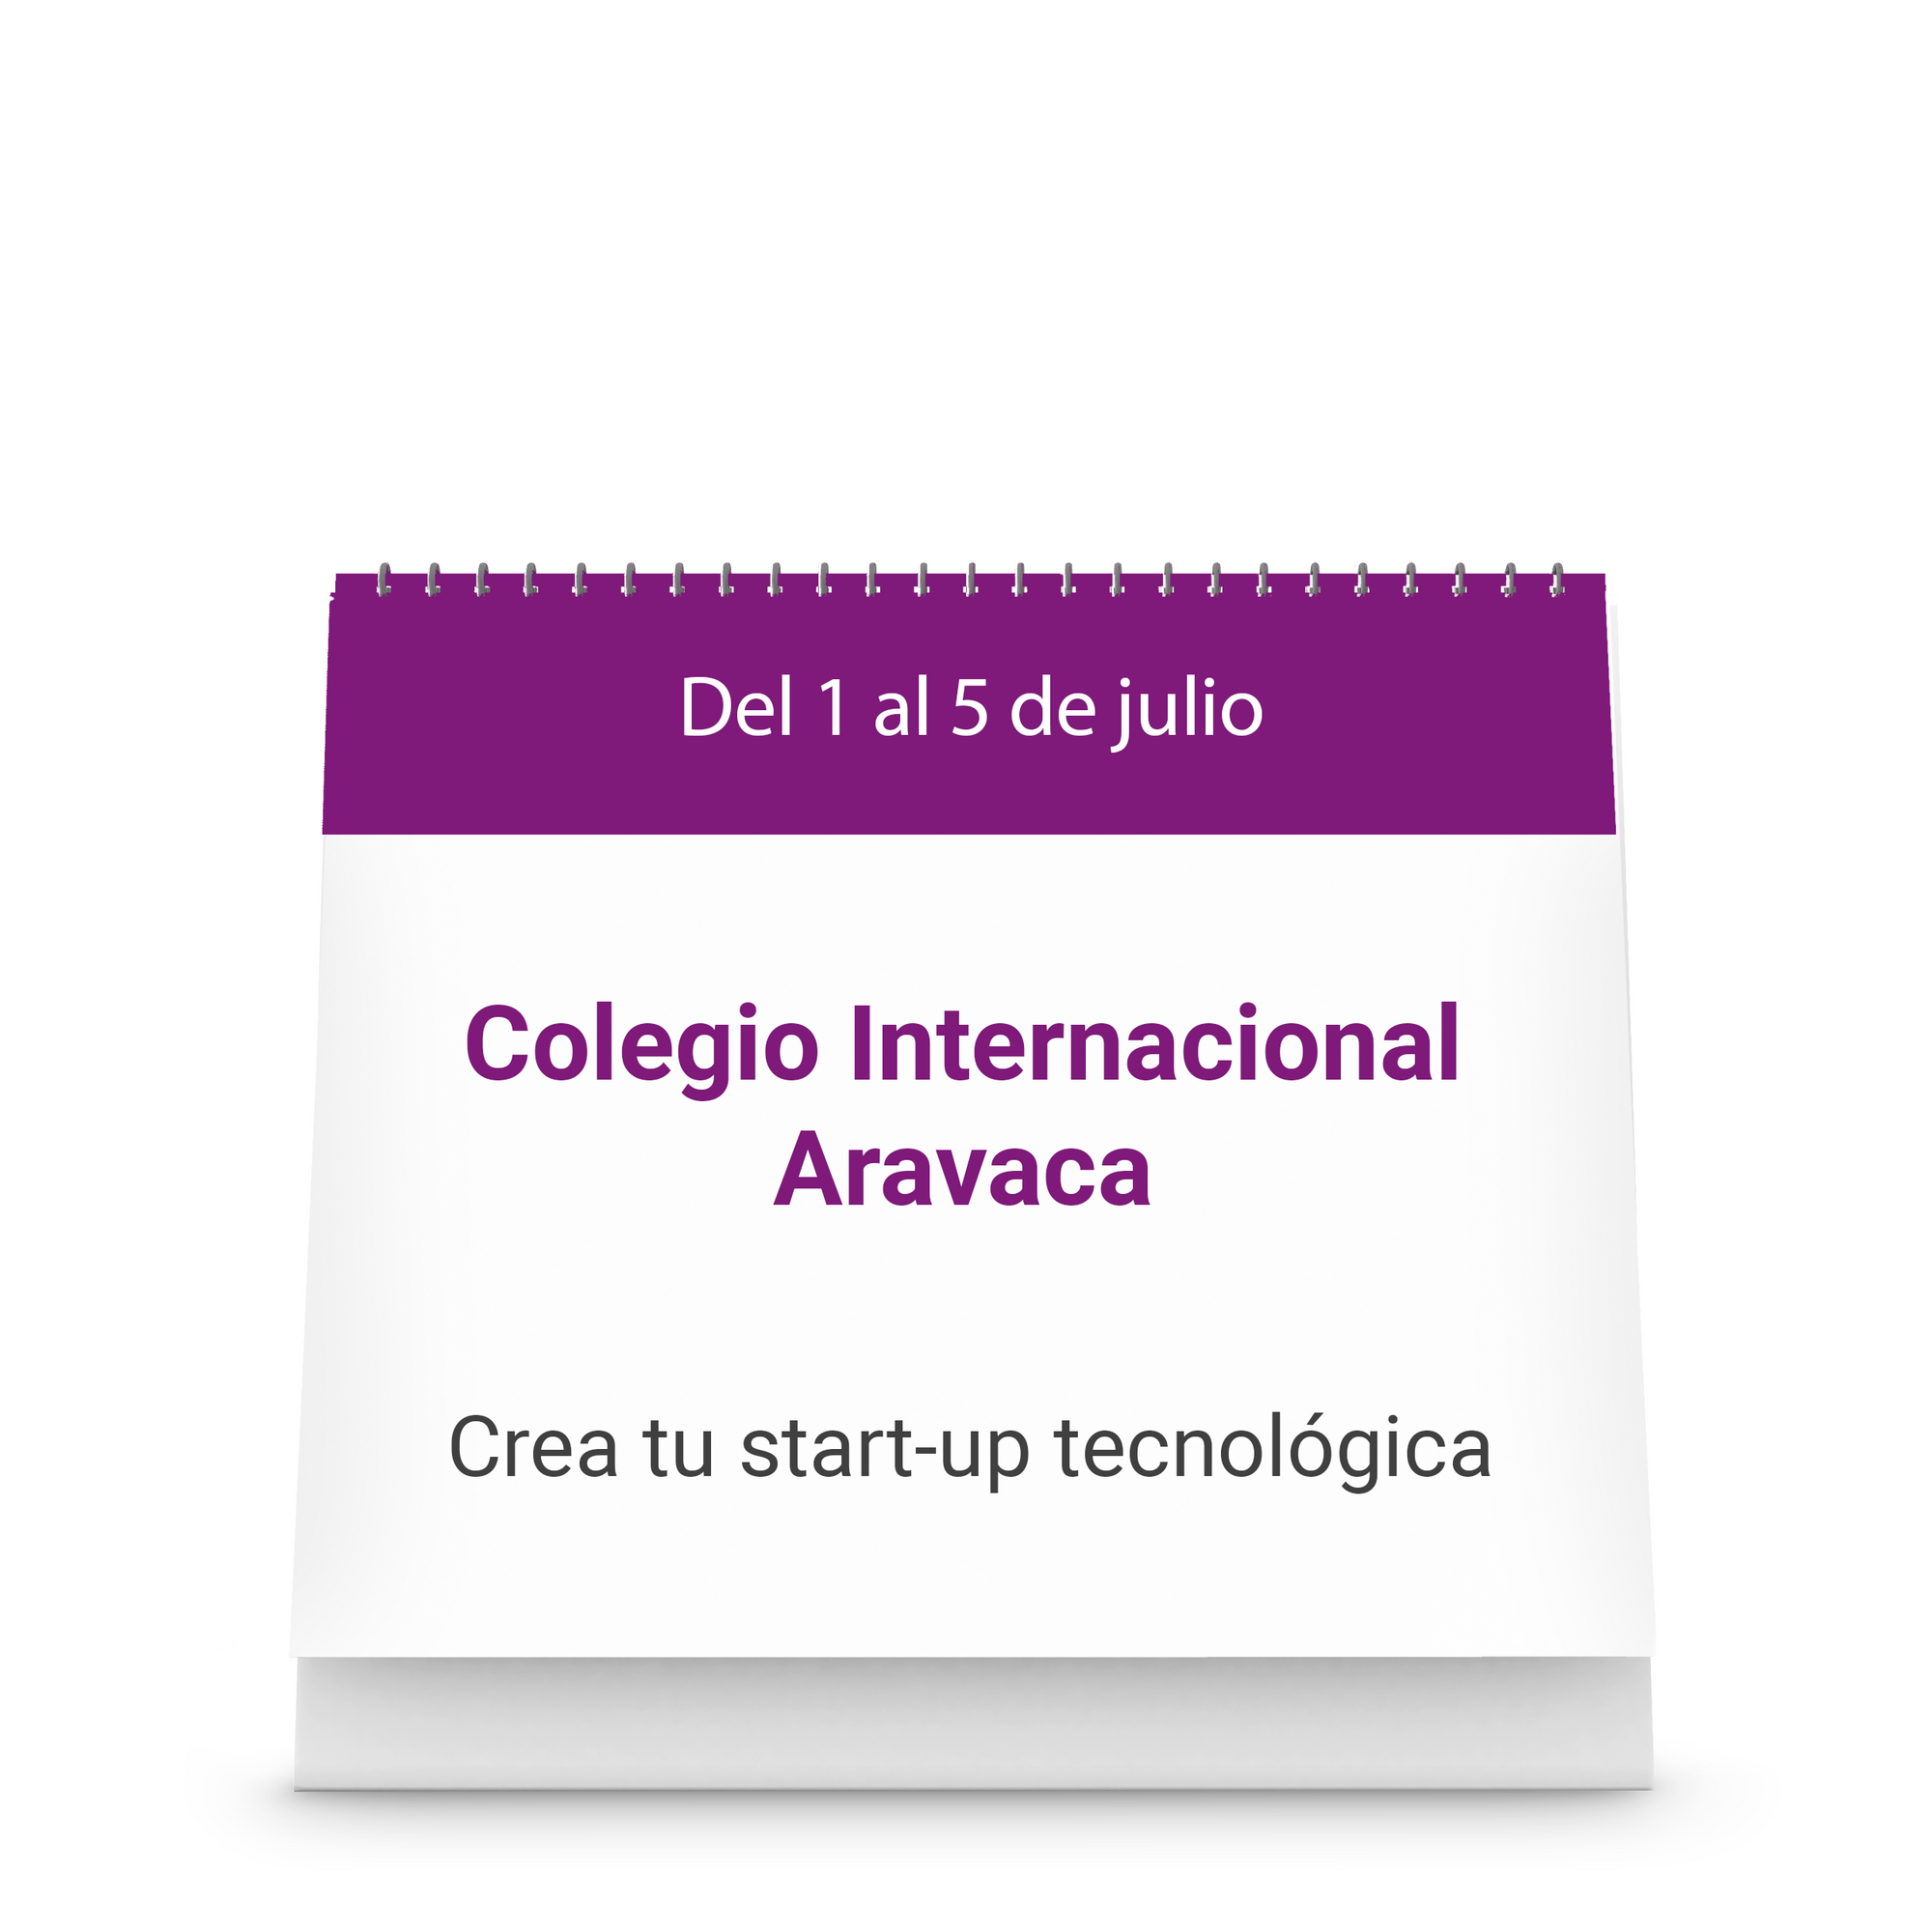 Colegio Internacional Aravaca - Crea tu start-up tecnológica